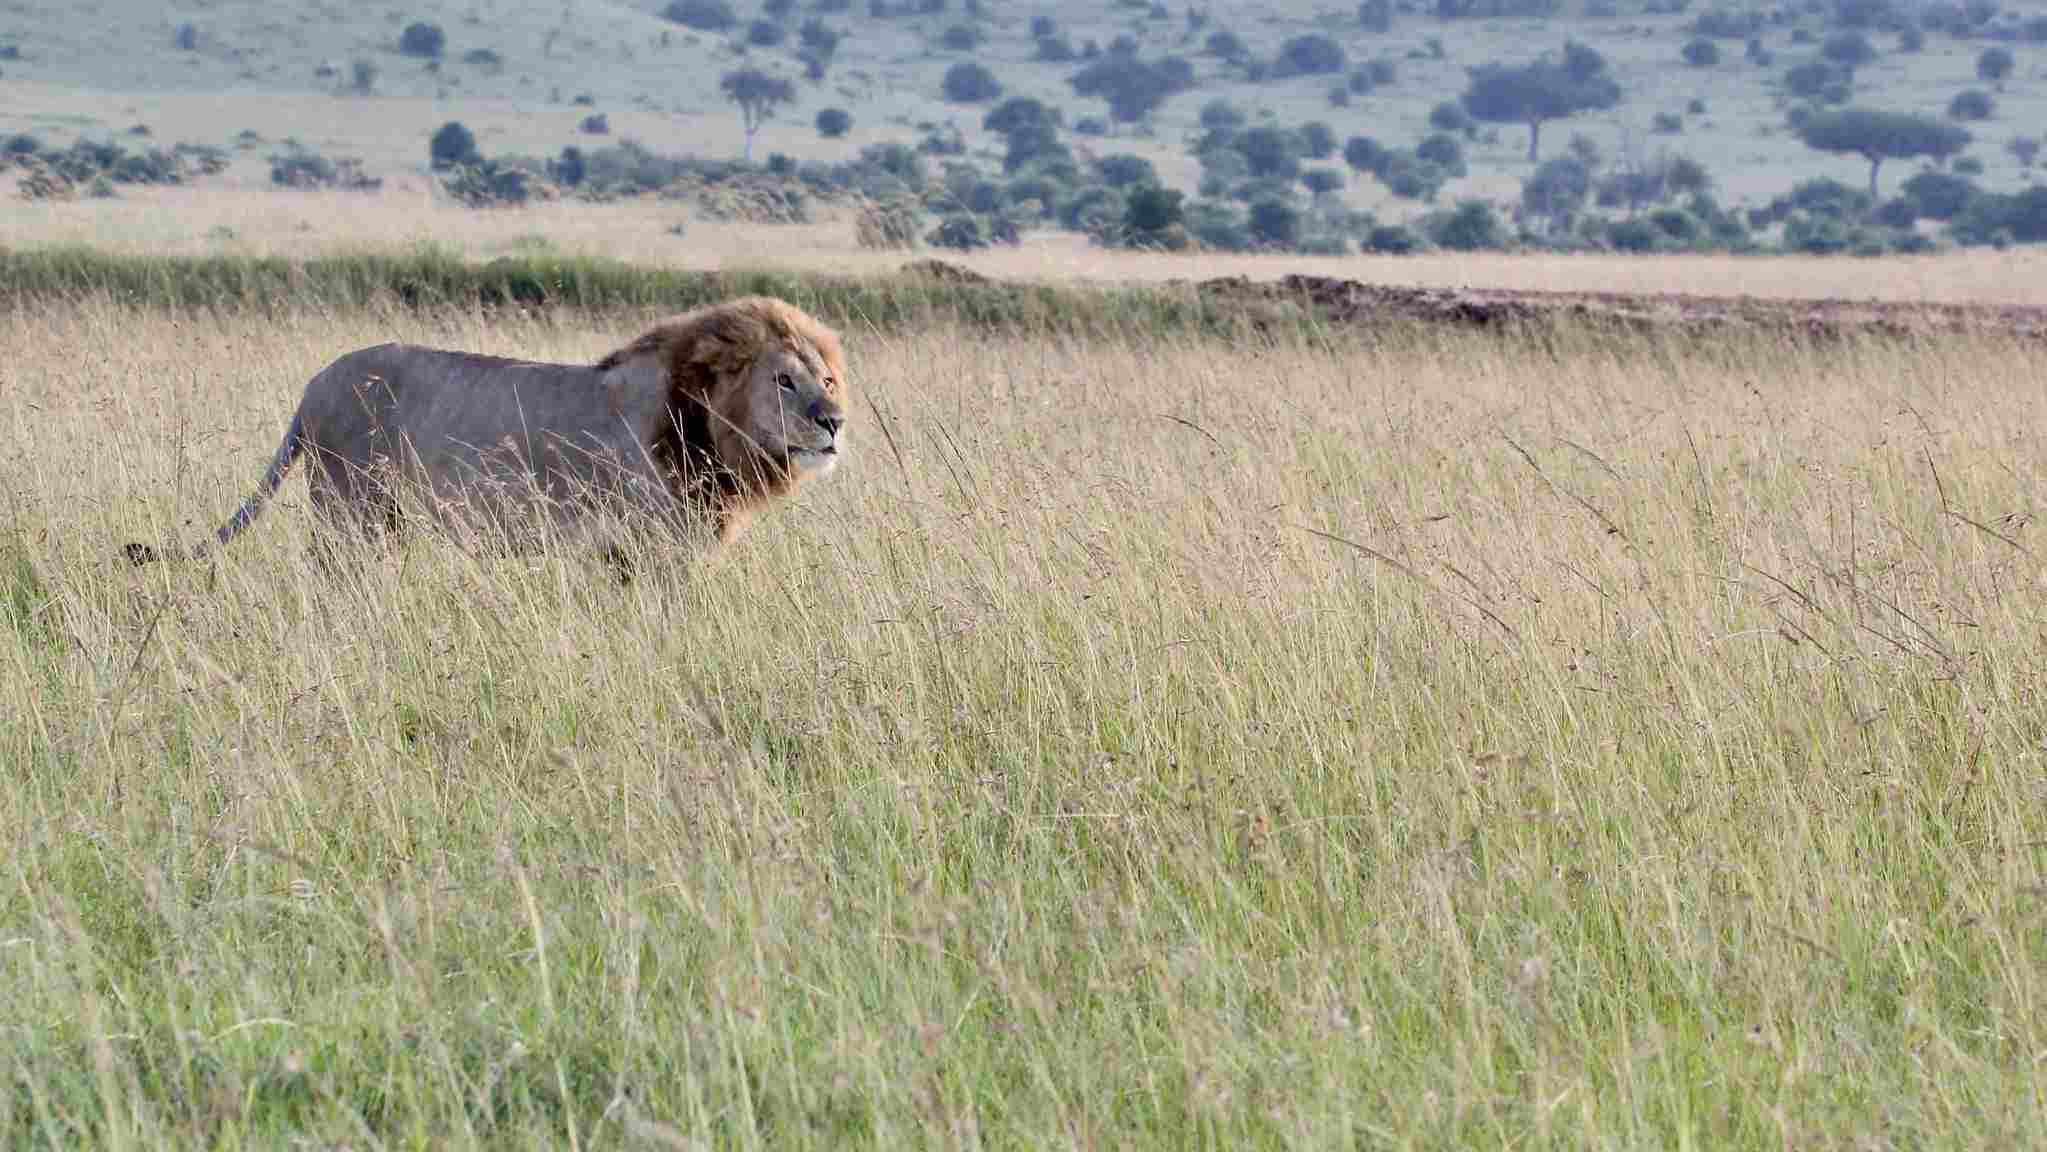 Leopard Vs Lion: The Savanna Grassland is a Natural Habitat for Wild Lions (Credit: Kandukuru Nagarjun 2018 .CC BY 2.0.)